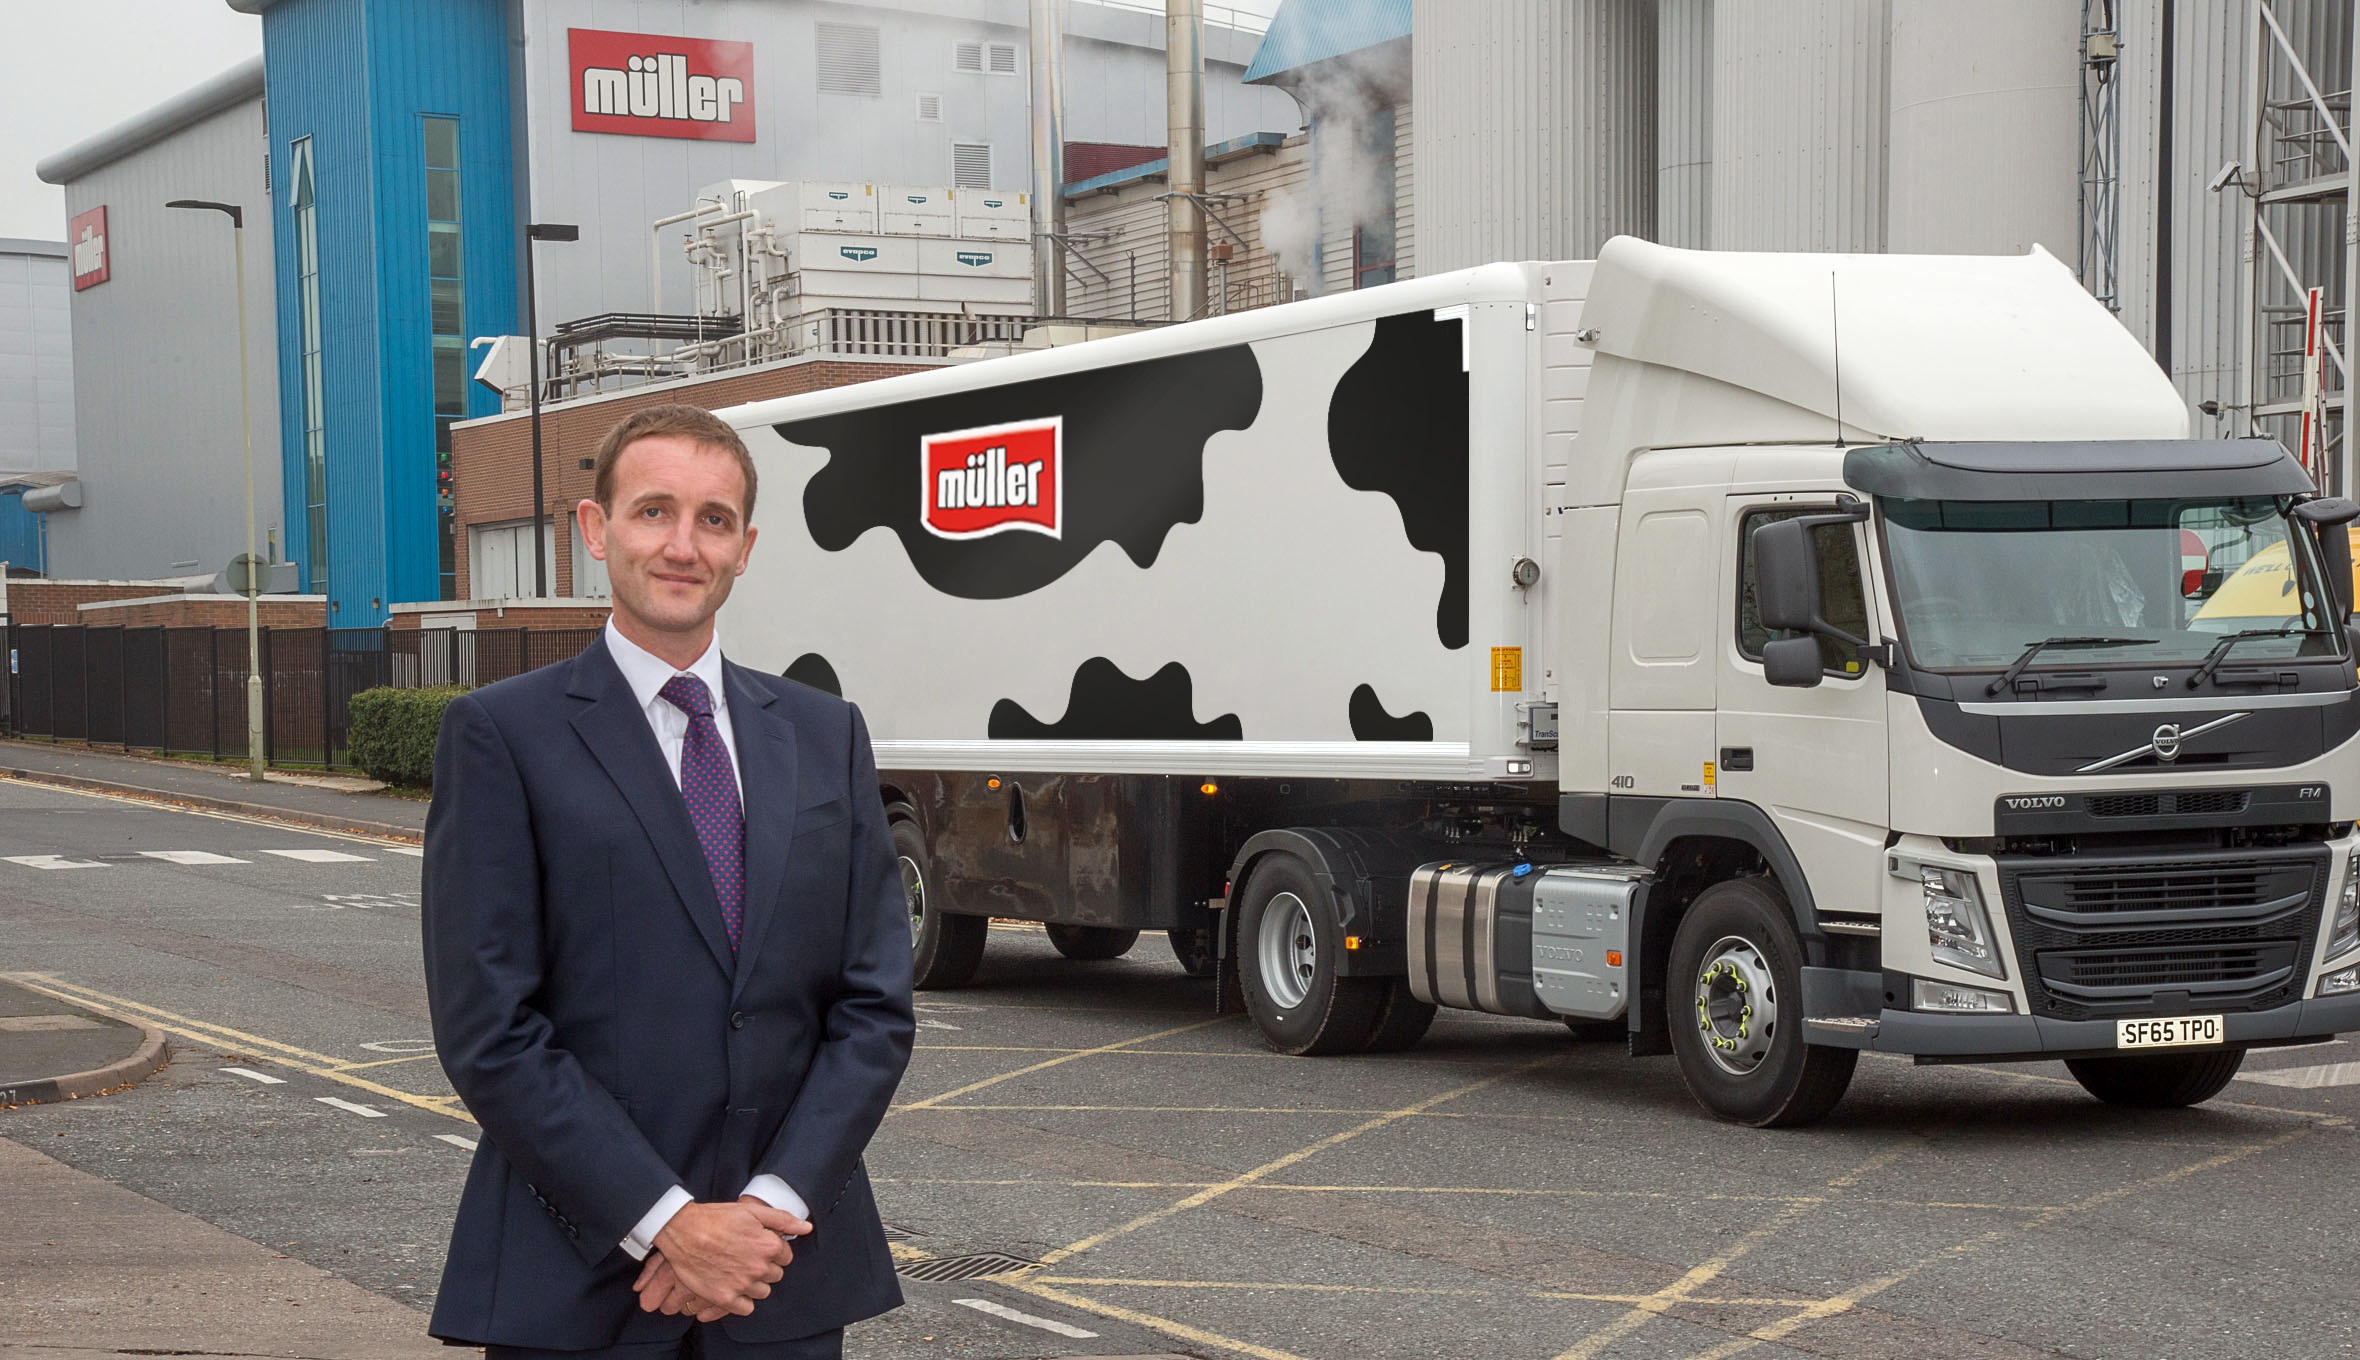 Andrew McInnes, managing director of Müller Milk & Ingredients